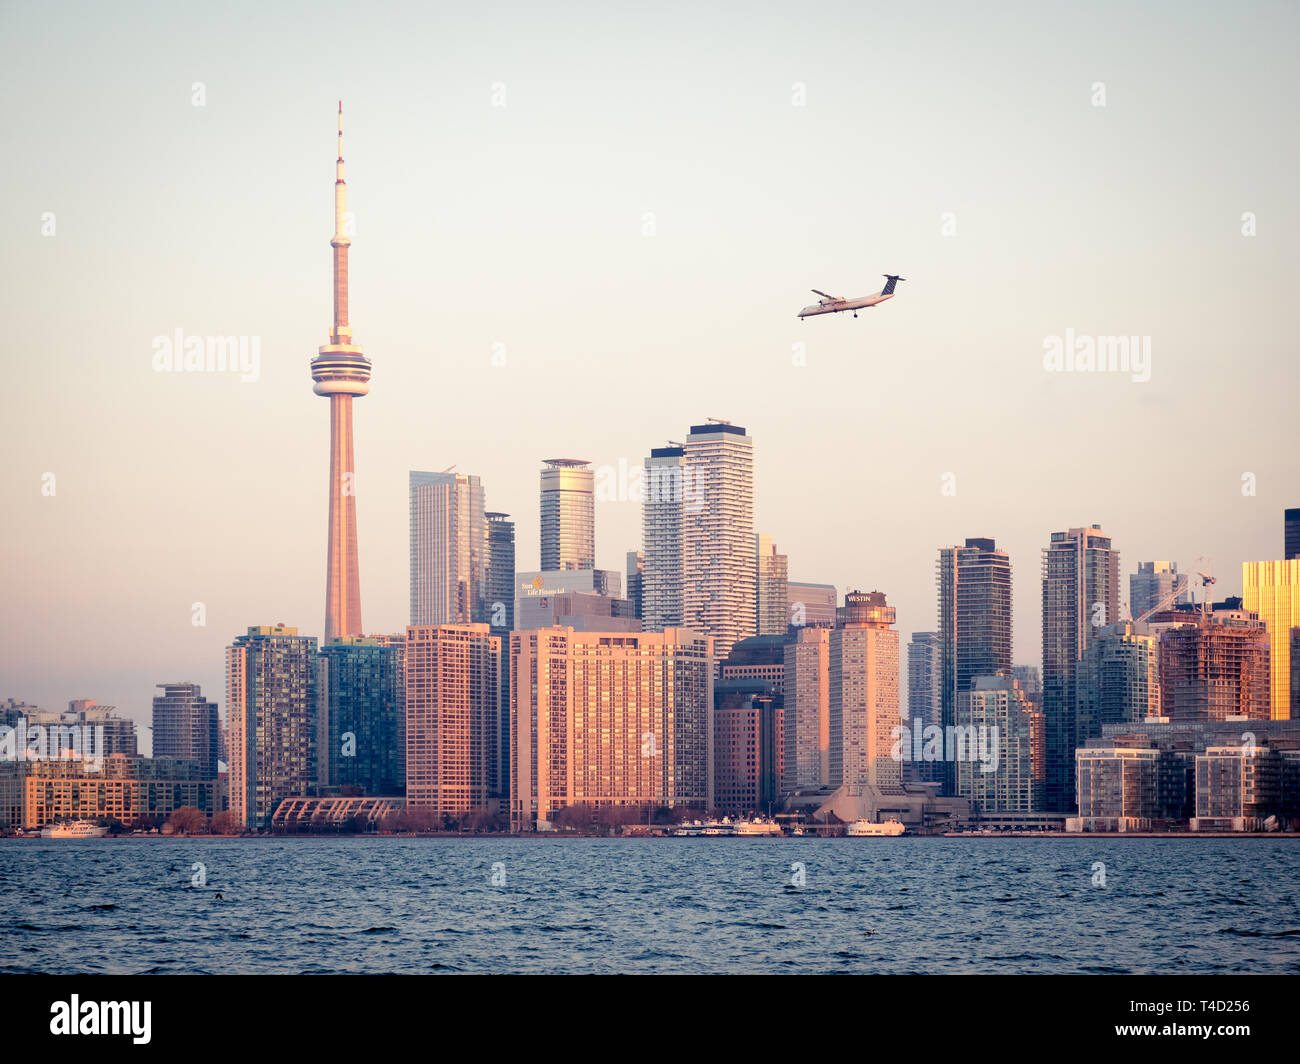 The CN Tower and spectacular skyline of Toronto, Ontario, Canada, as seen from Ward's Island (Toronto Islands) across Lake Ontario. Stock Photo